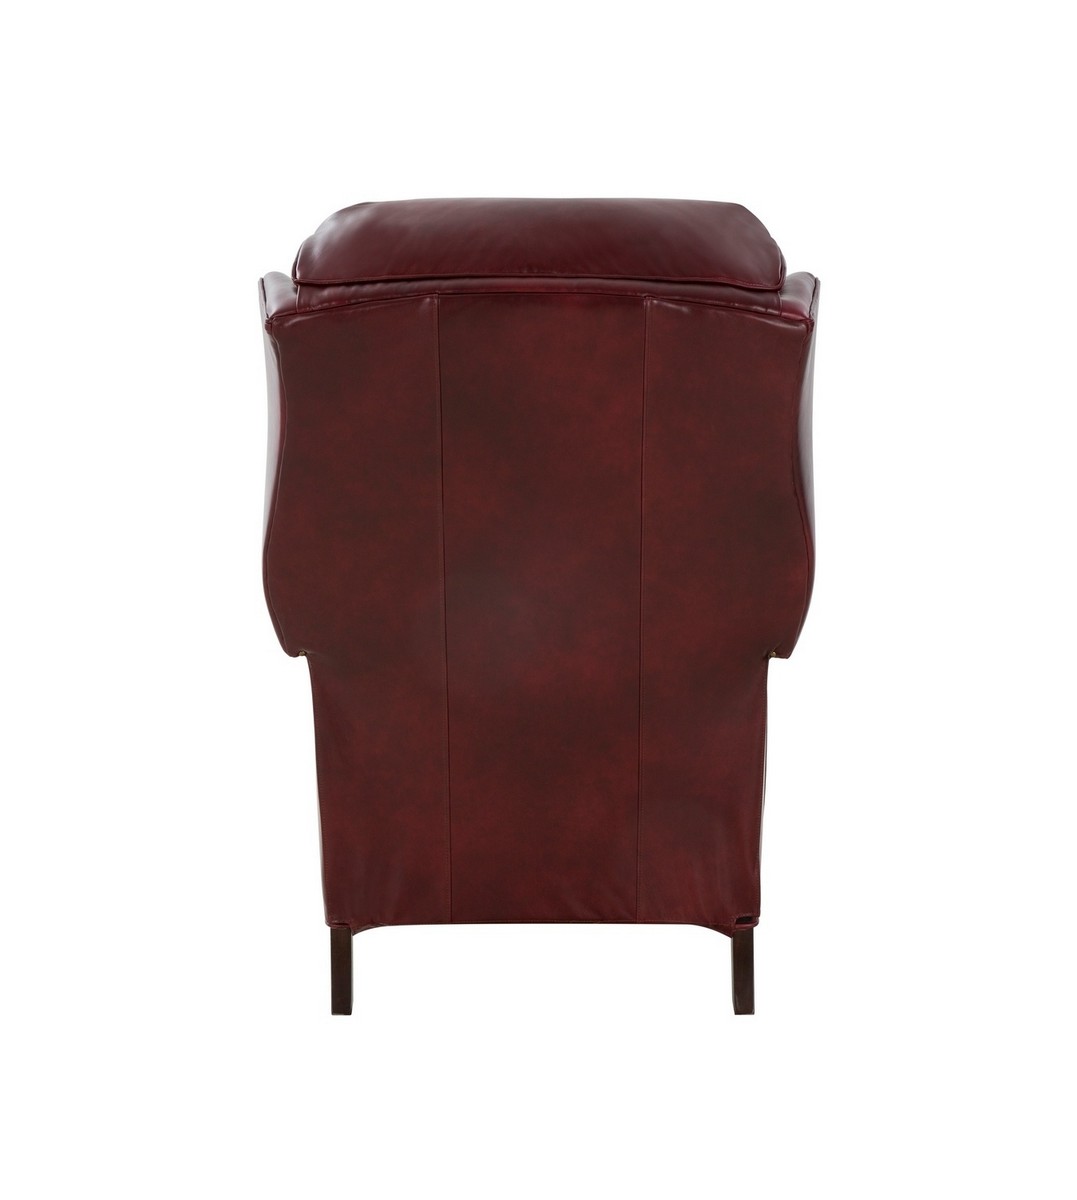 Barcalounger Danbury Recliner Chair - Emerson Sangria/Top Grain Leather